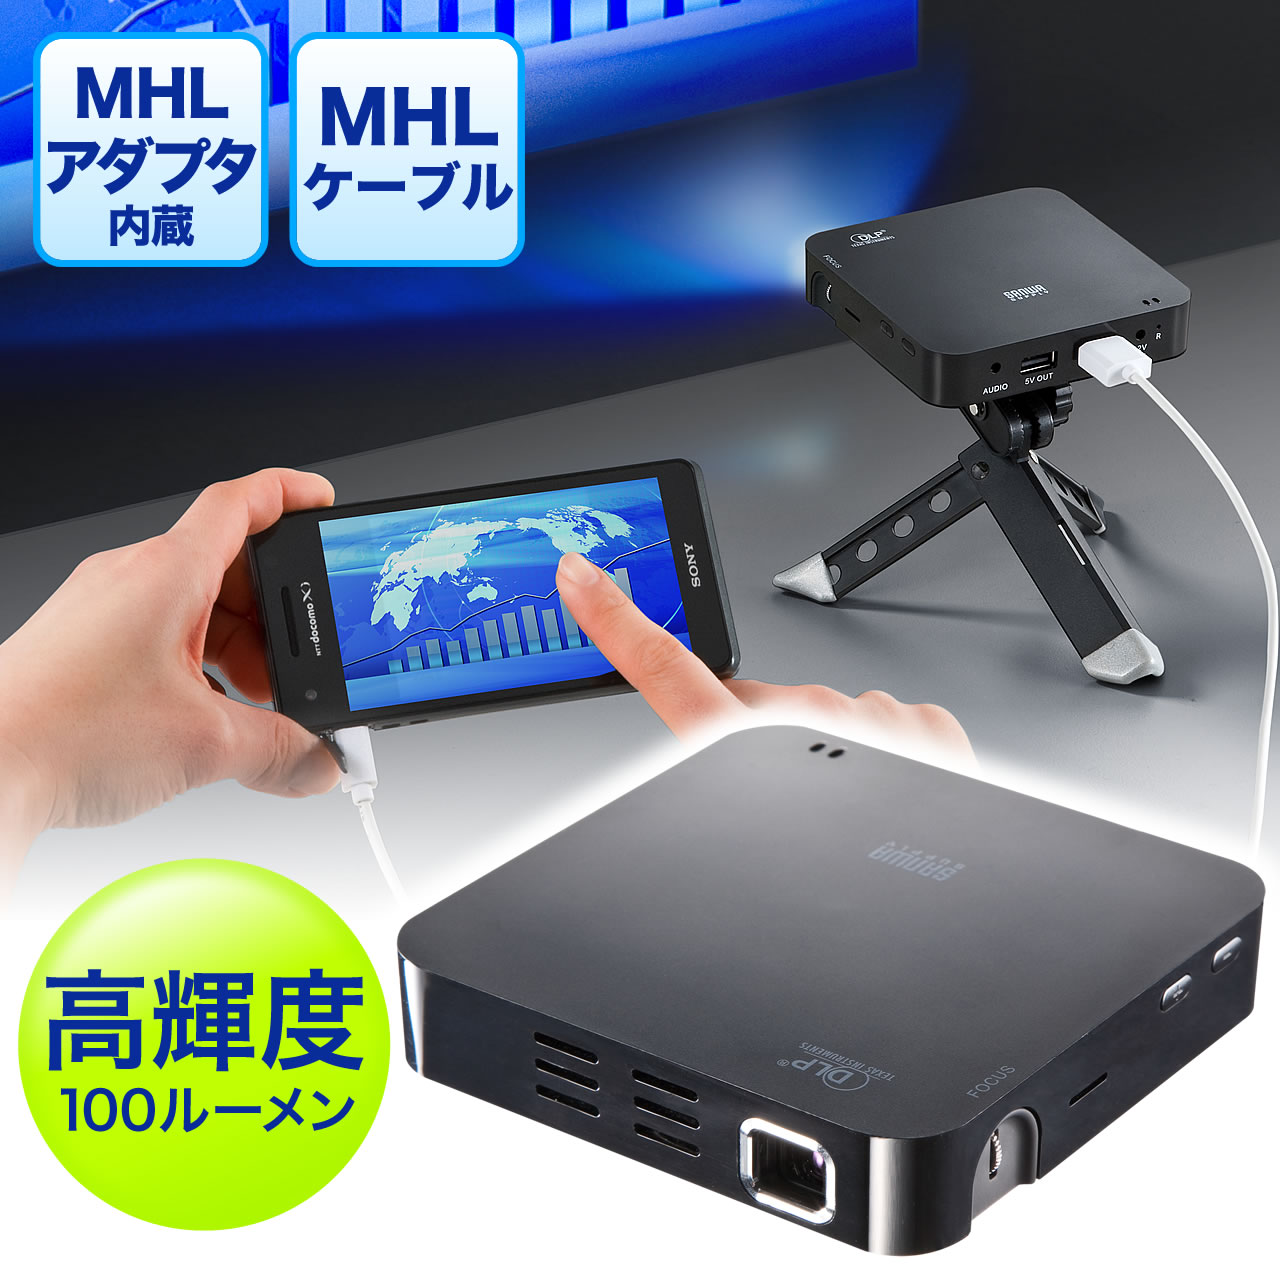 Hdmiモバイルプロジェクター Dlp Mhlスマートフォン対応 小型 85ルーメン ブラック 400 Prj018bkの販売商品 通販ならサンワダイレクト